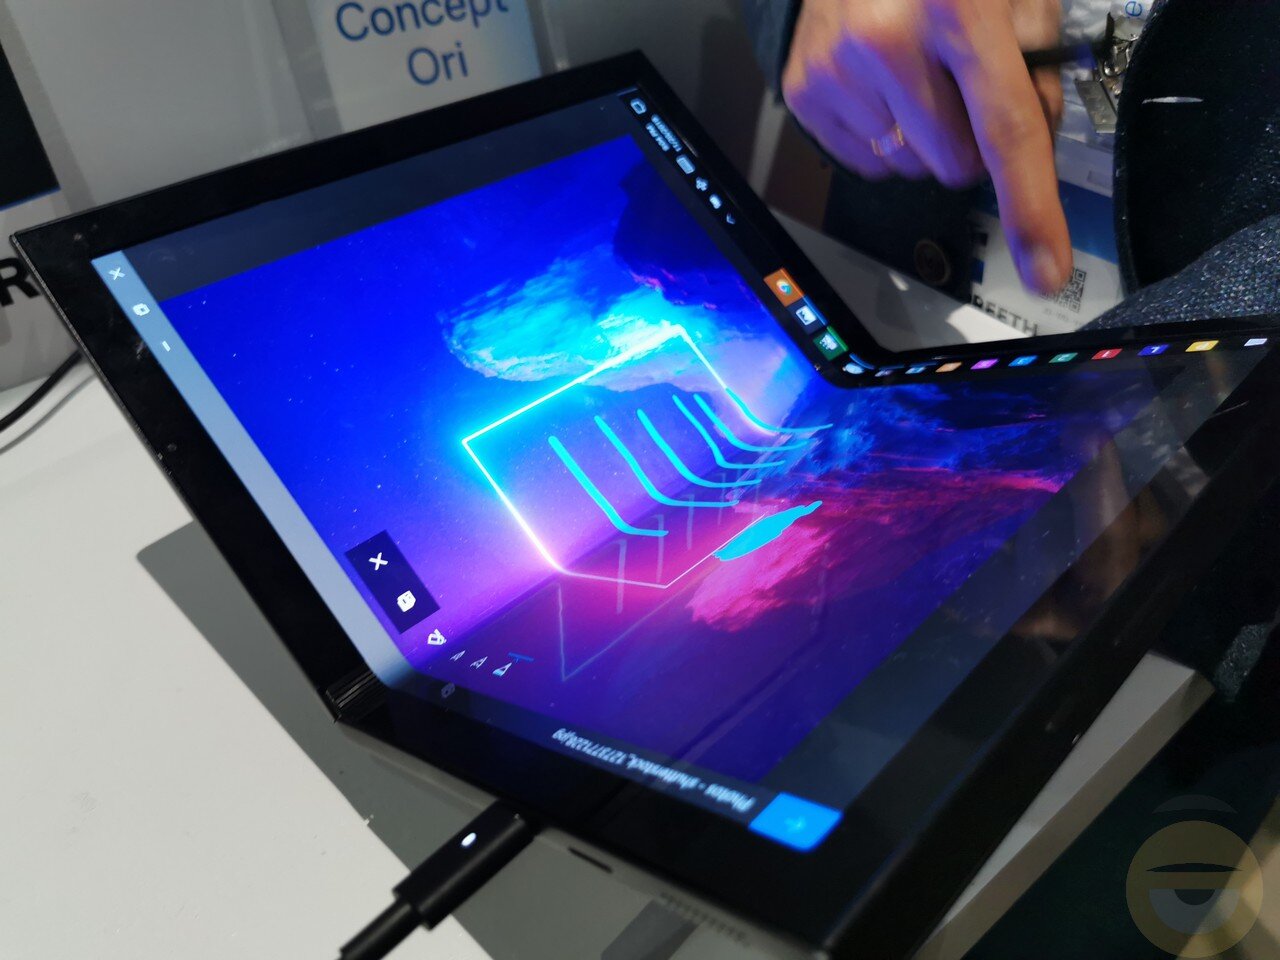 Dell «Concept Ori»: Windows PC με αναδιπλούμενη οθόνη